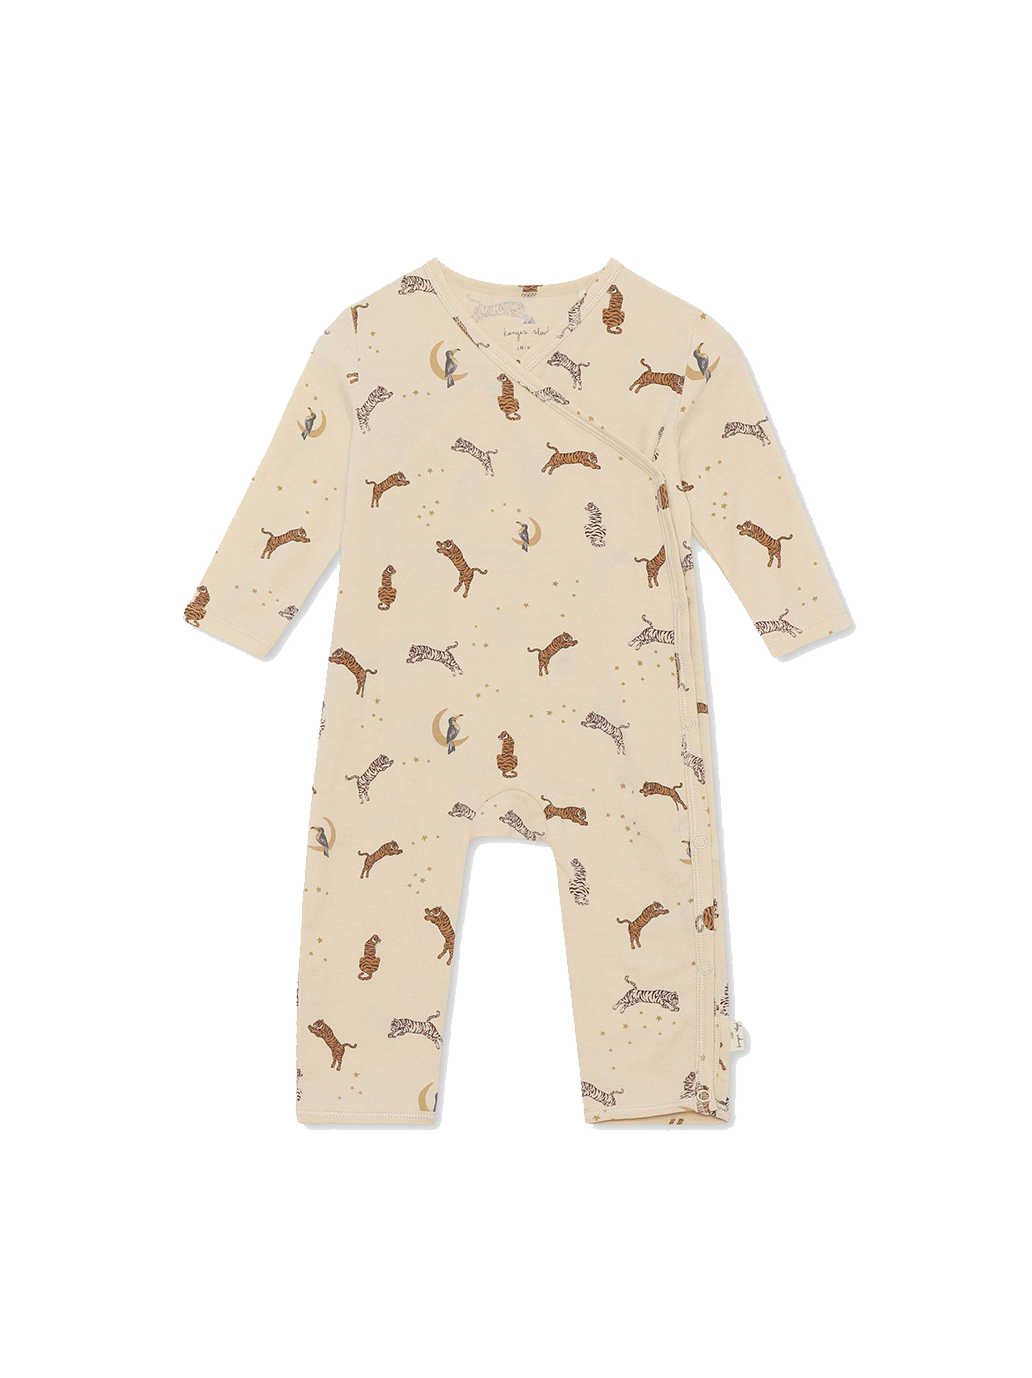 Pijama cruzado recién nacido Onesie de algodón orgánico